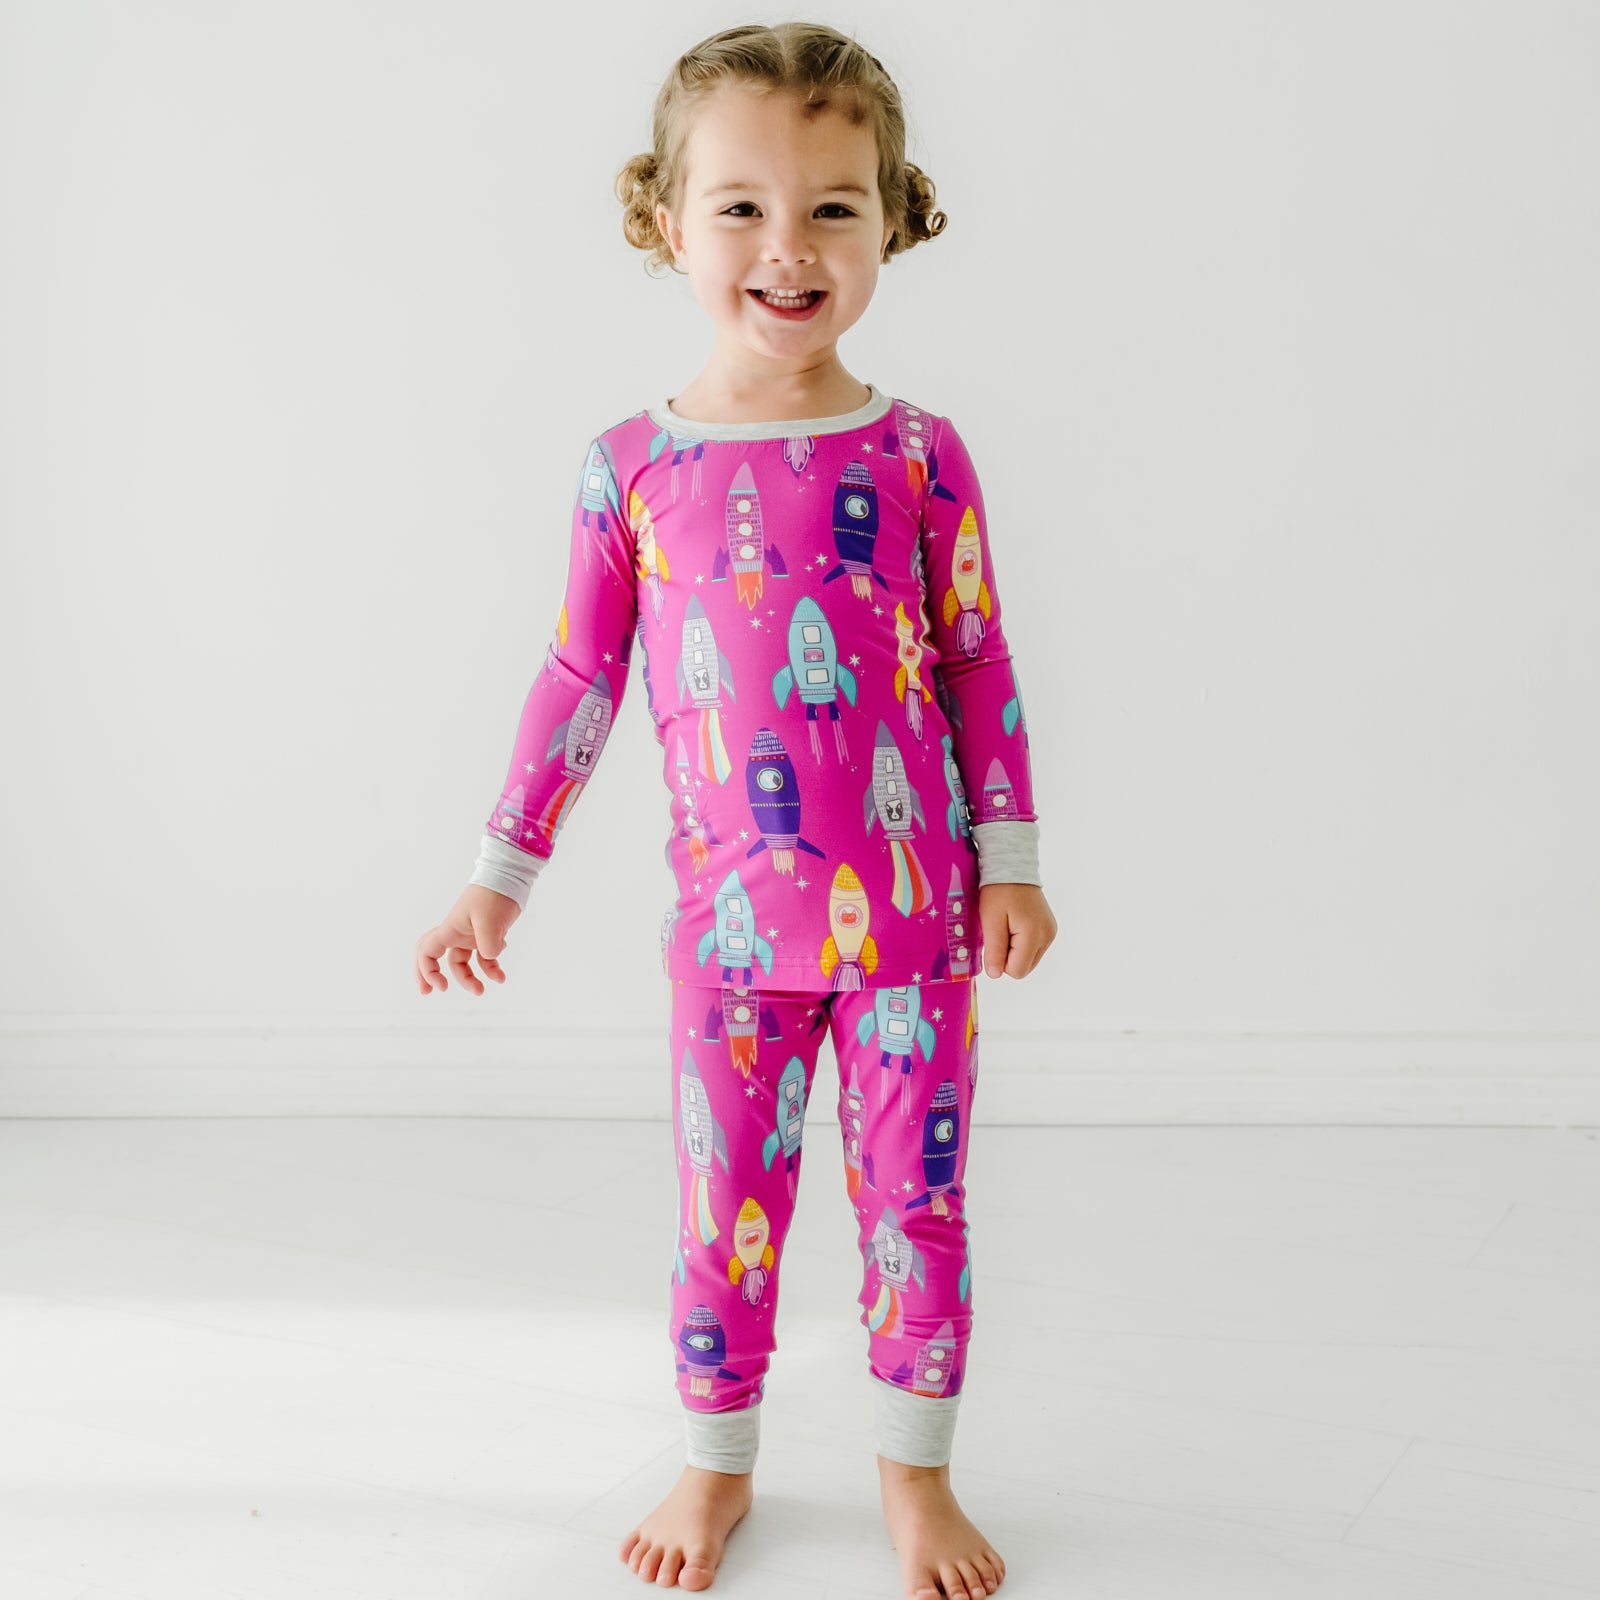 Child wearing a Pink Space Explorer two piece pajama set